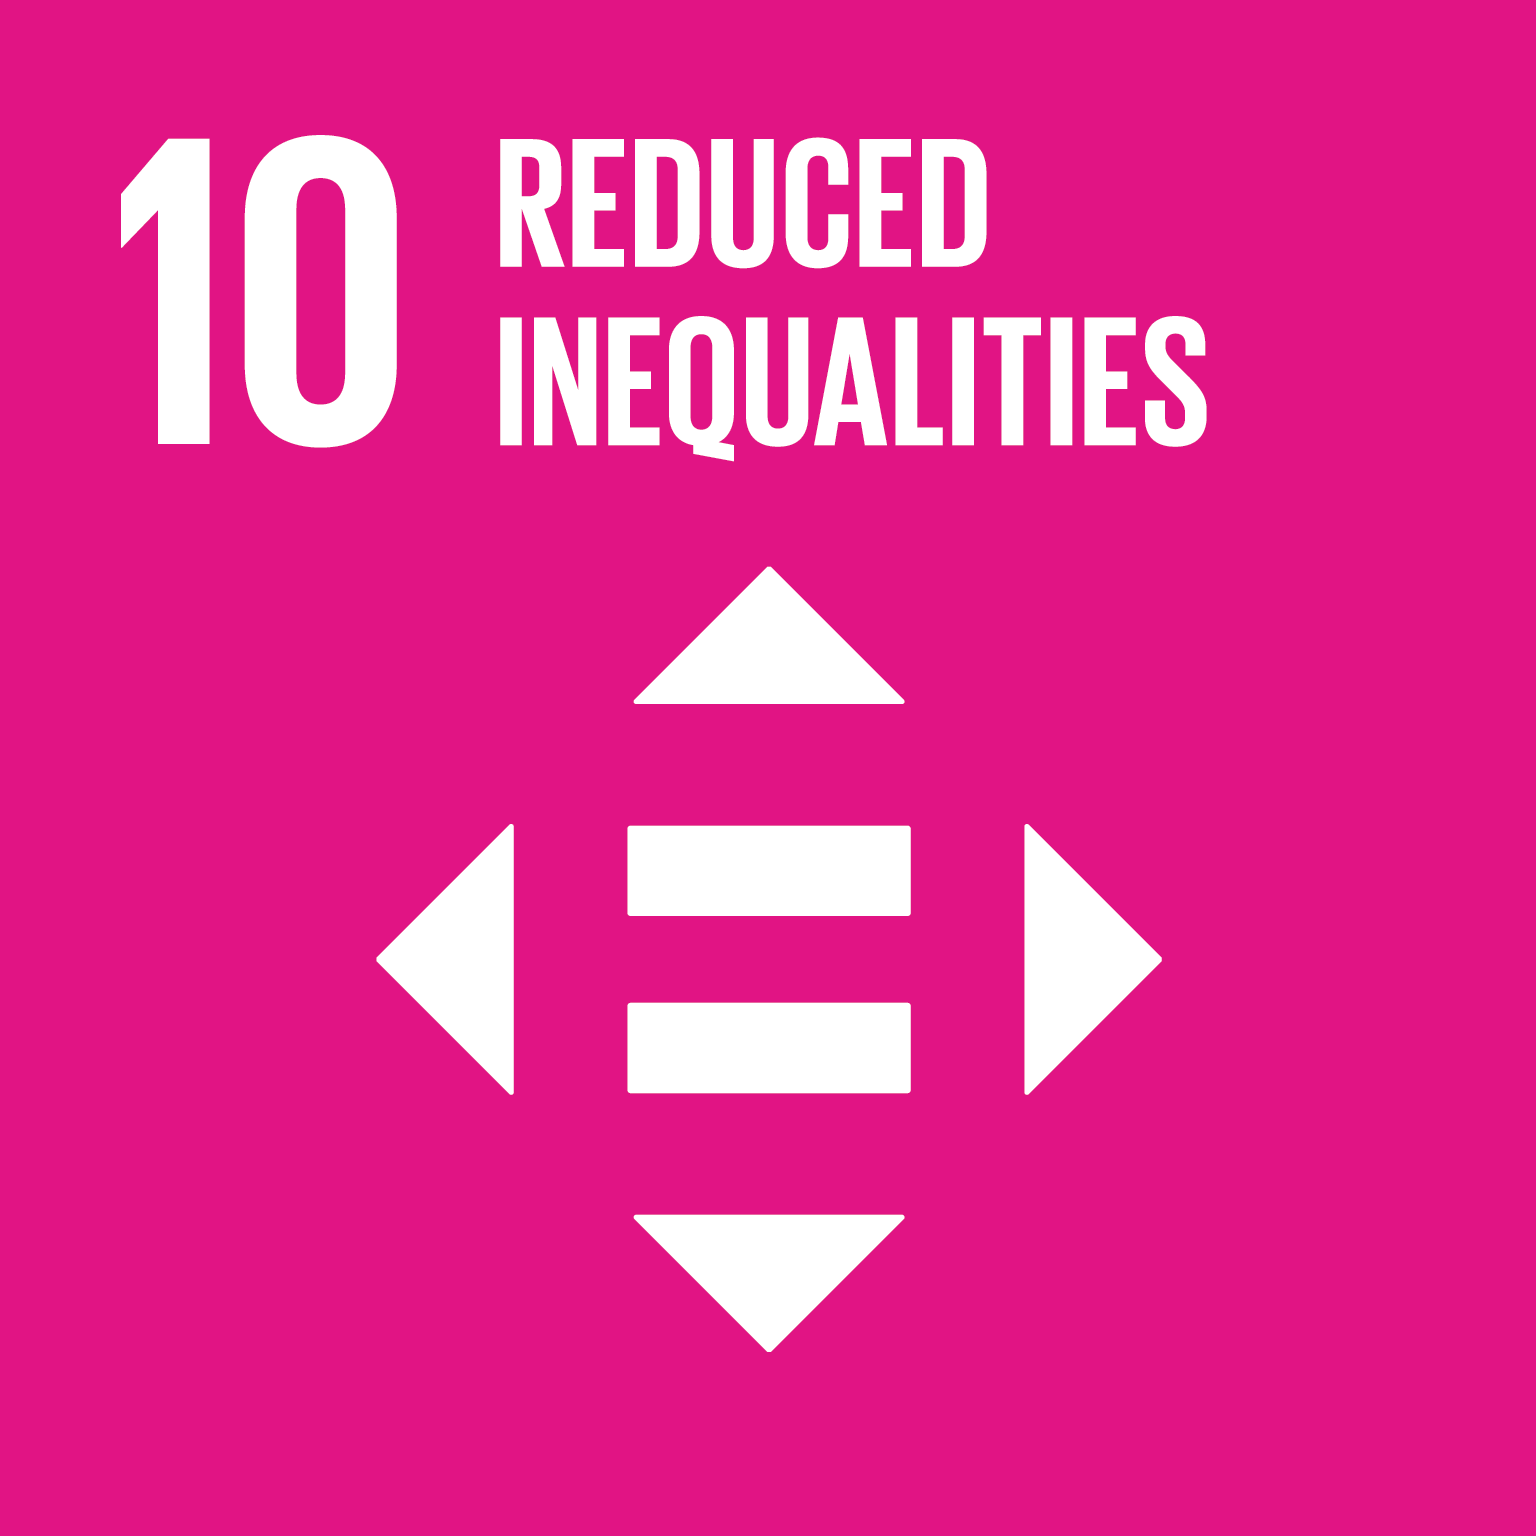 SDG Goal 10 - Reduce inequalities